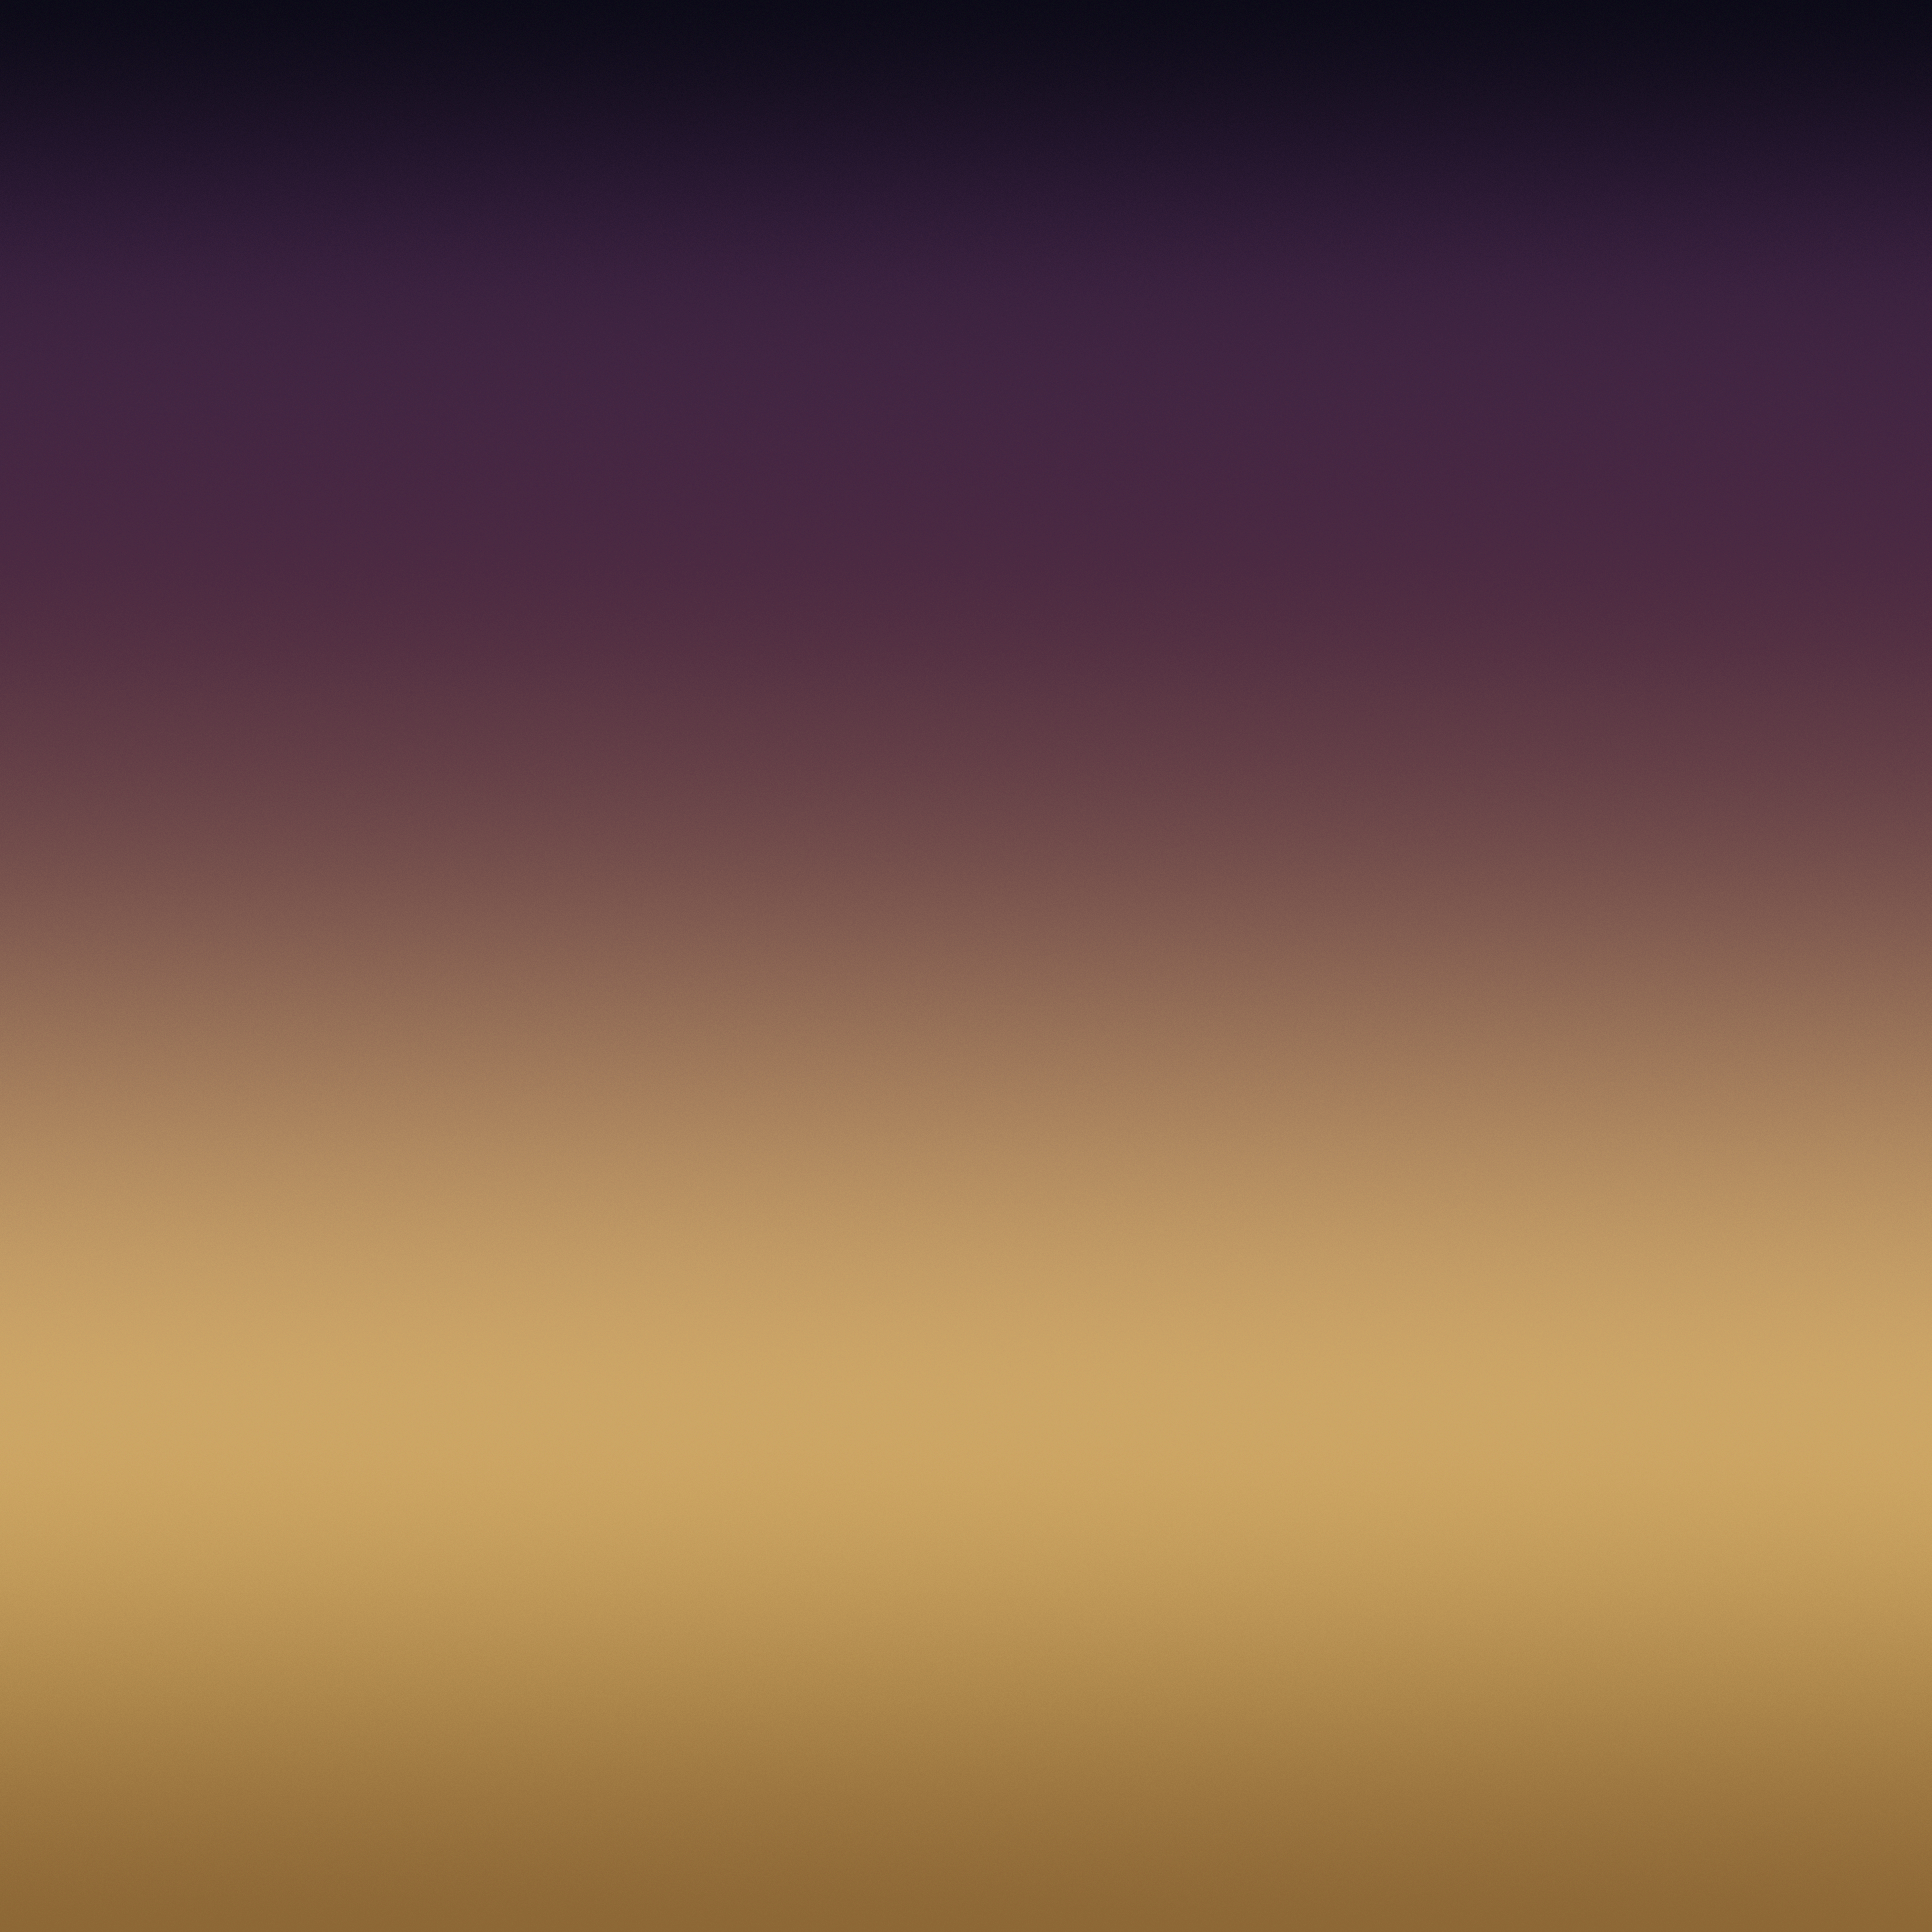 carta da parati galaxy s8,cielo,viola,viola,marrone,giallo